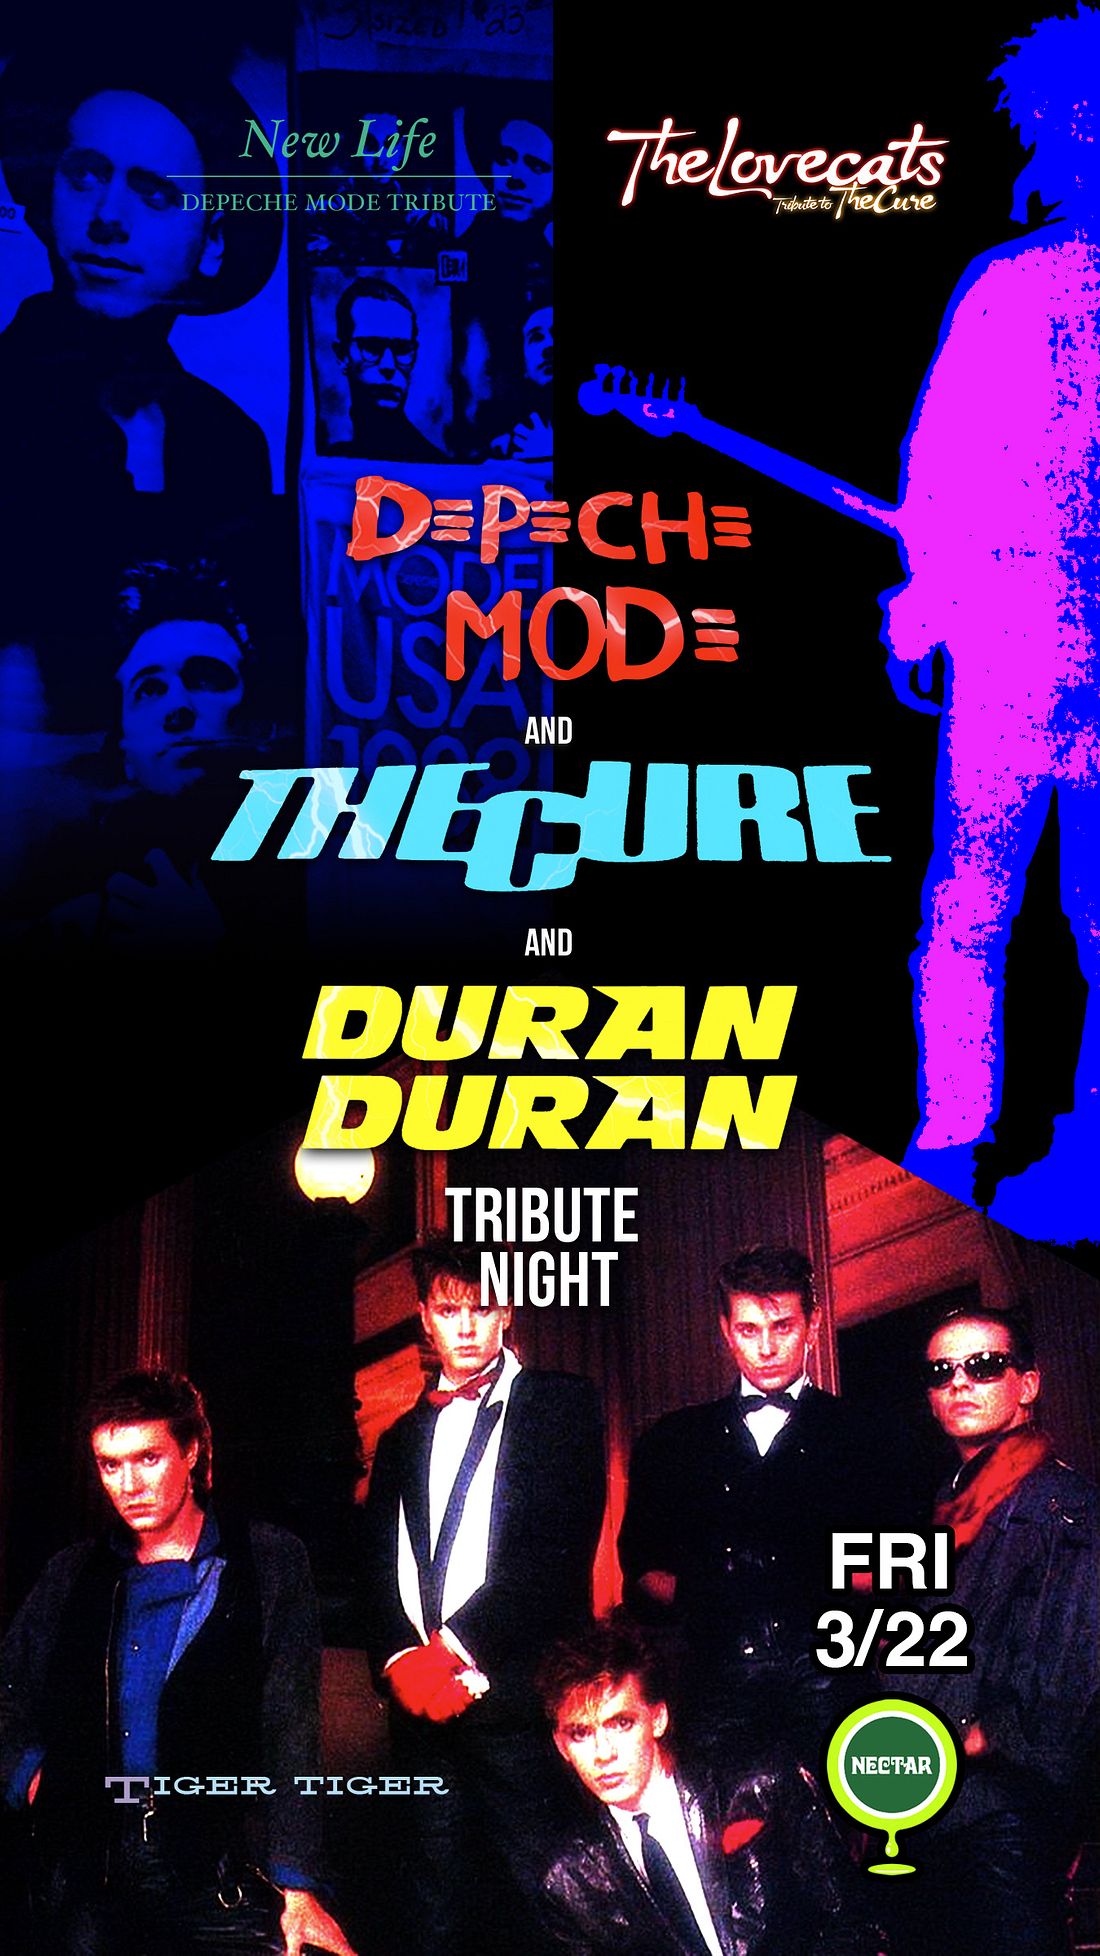 Duran Duran, Human League, Depeche Mode: These British New Wave